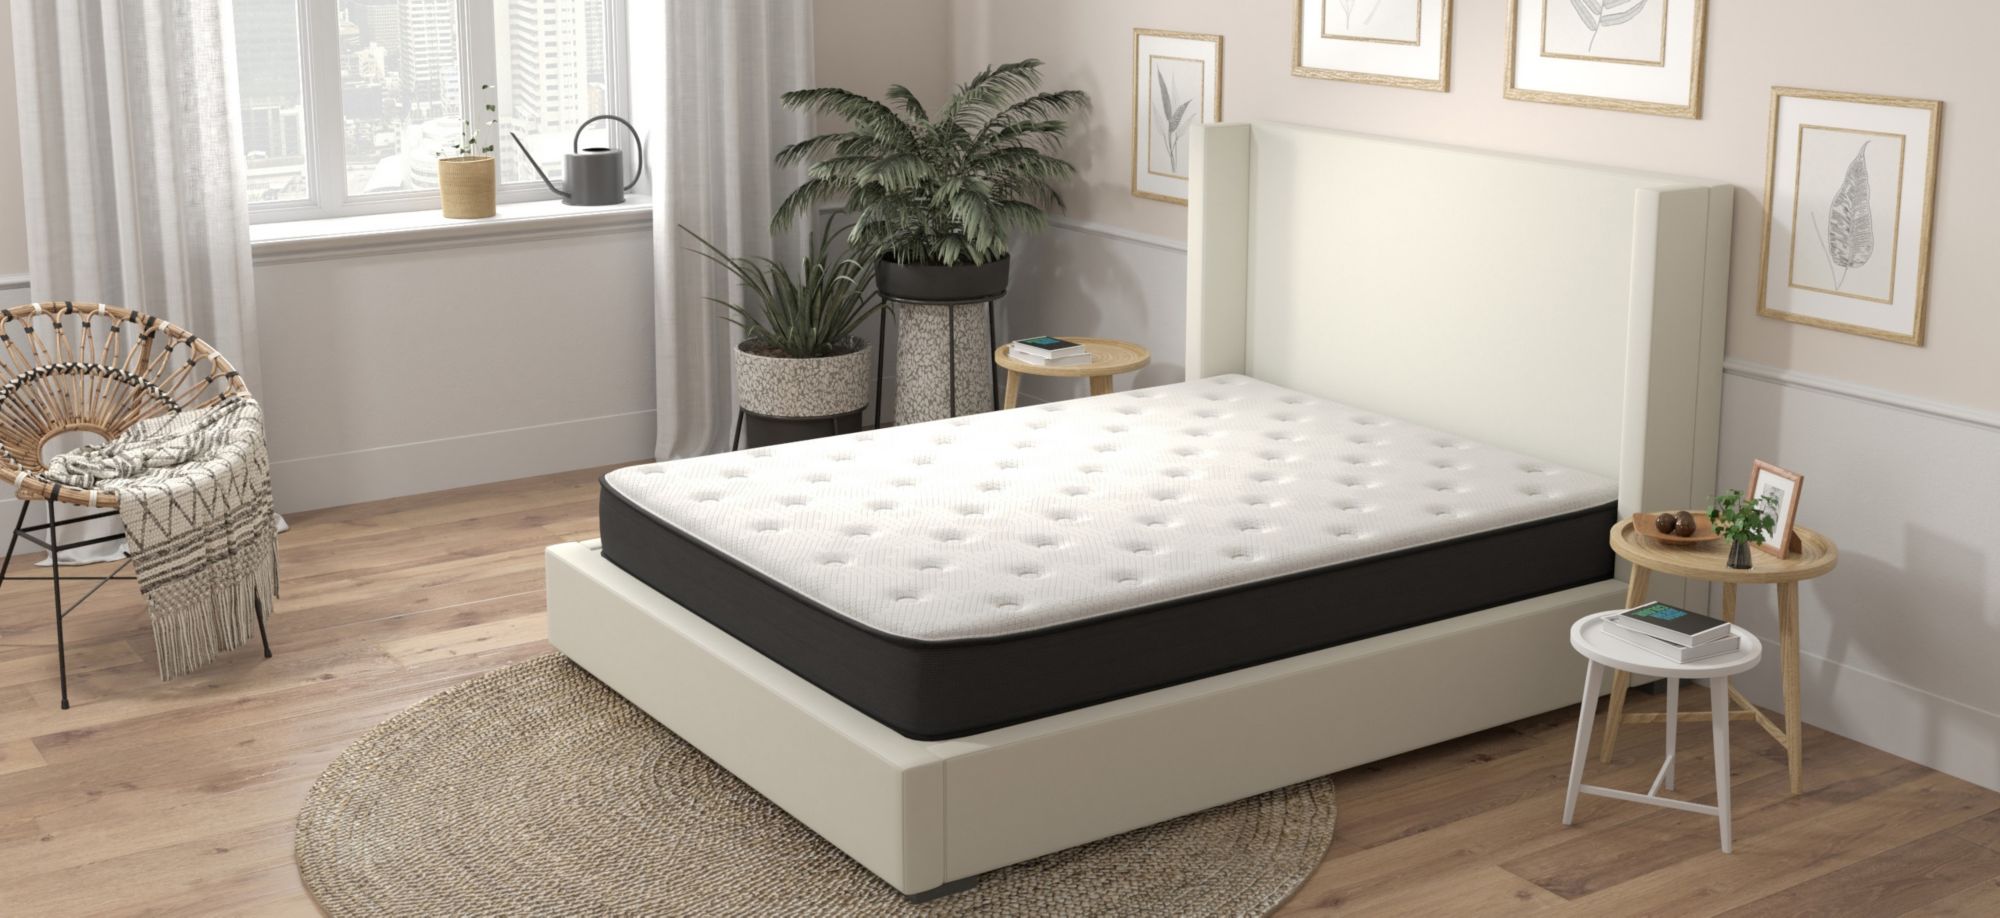 SleepI 10-inch Medium Hybrid Mattress in a Box in White by Corsicana Bedding